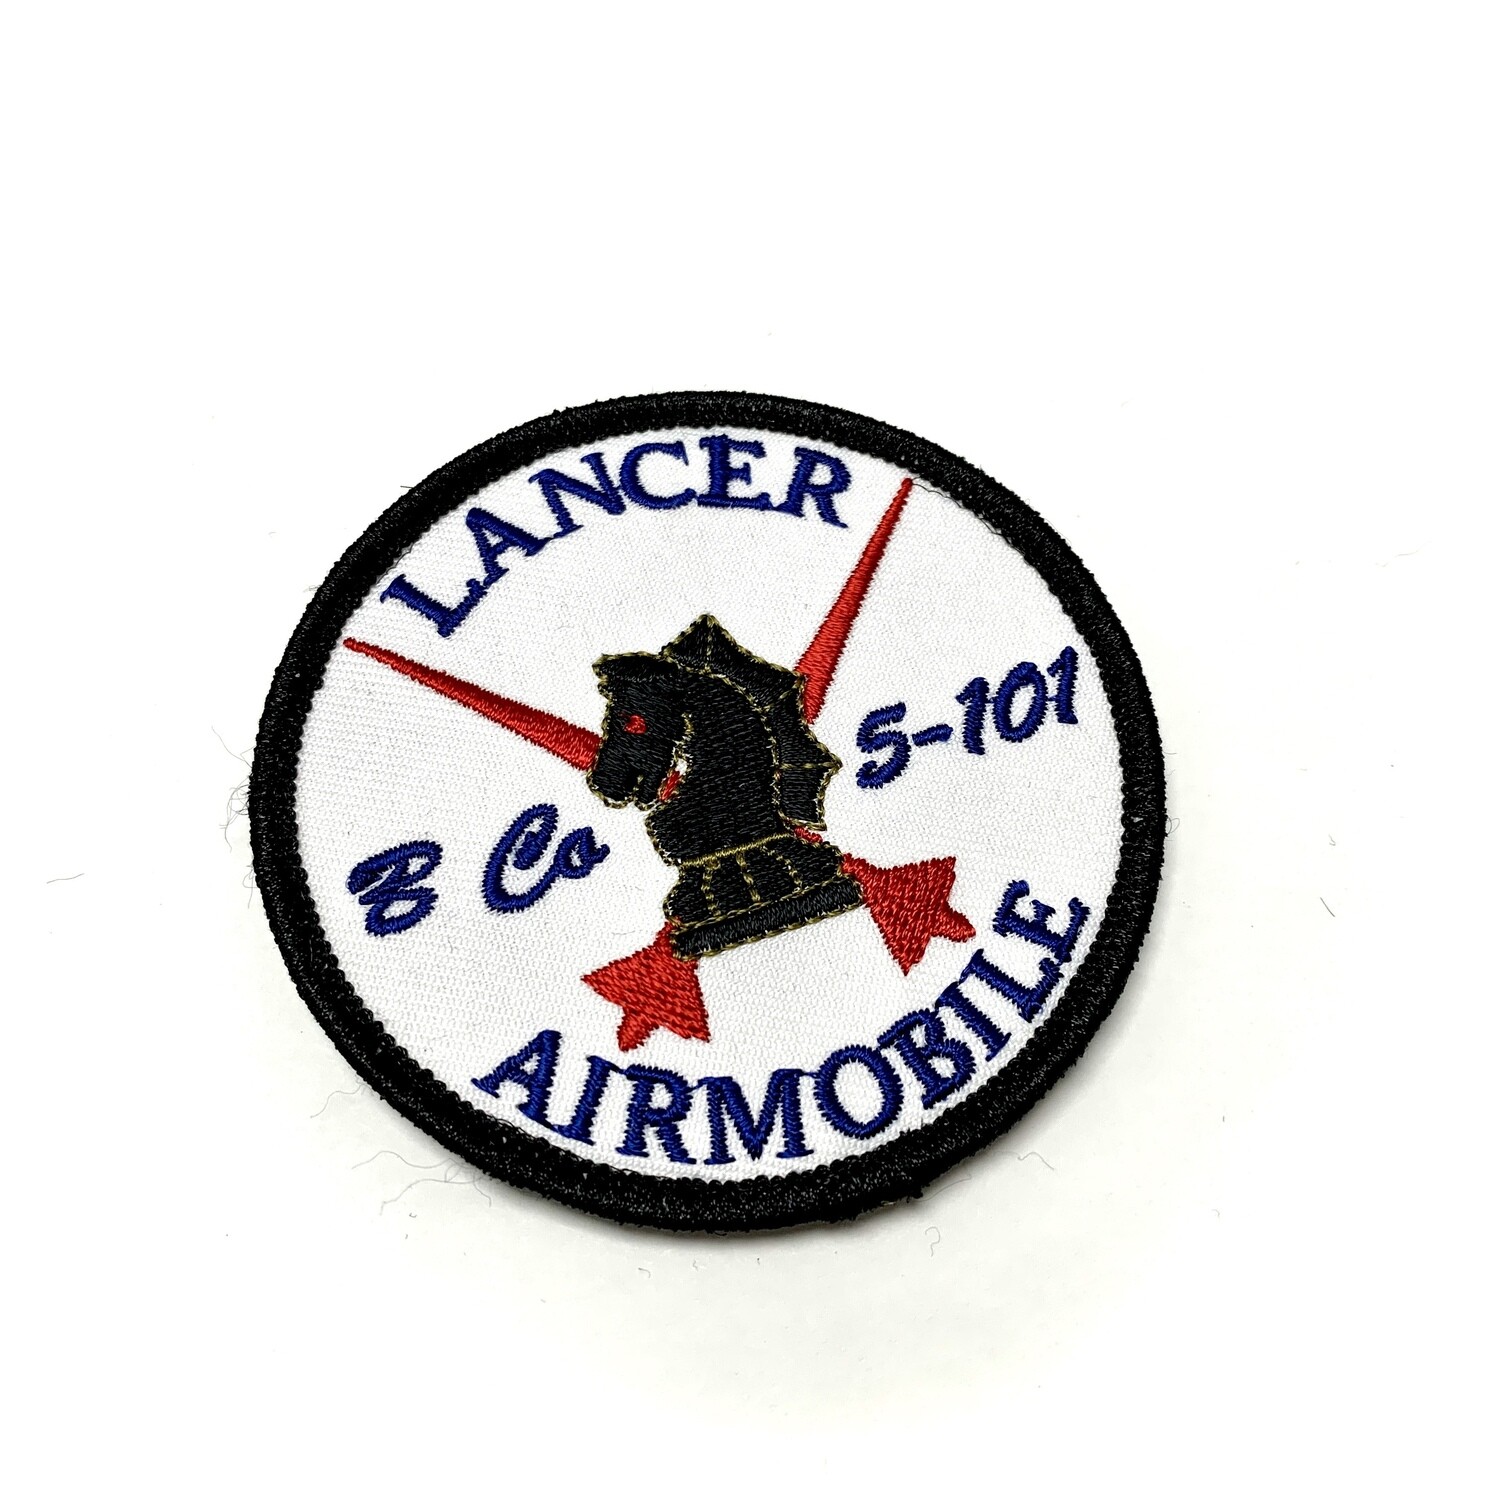 B Co 5-101 "Lancer" Patch